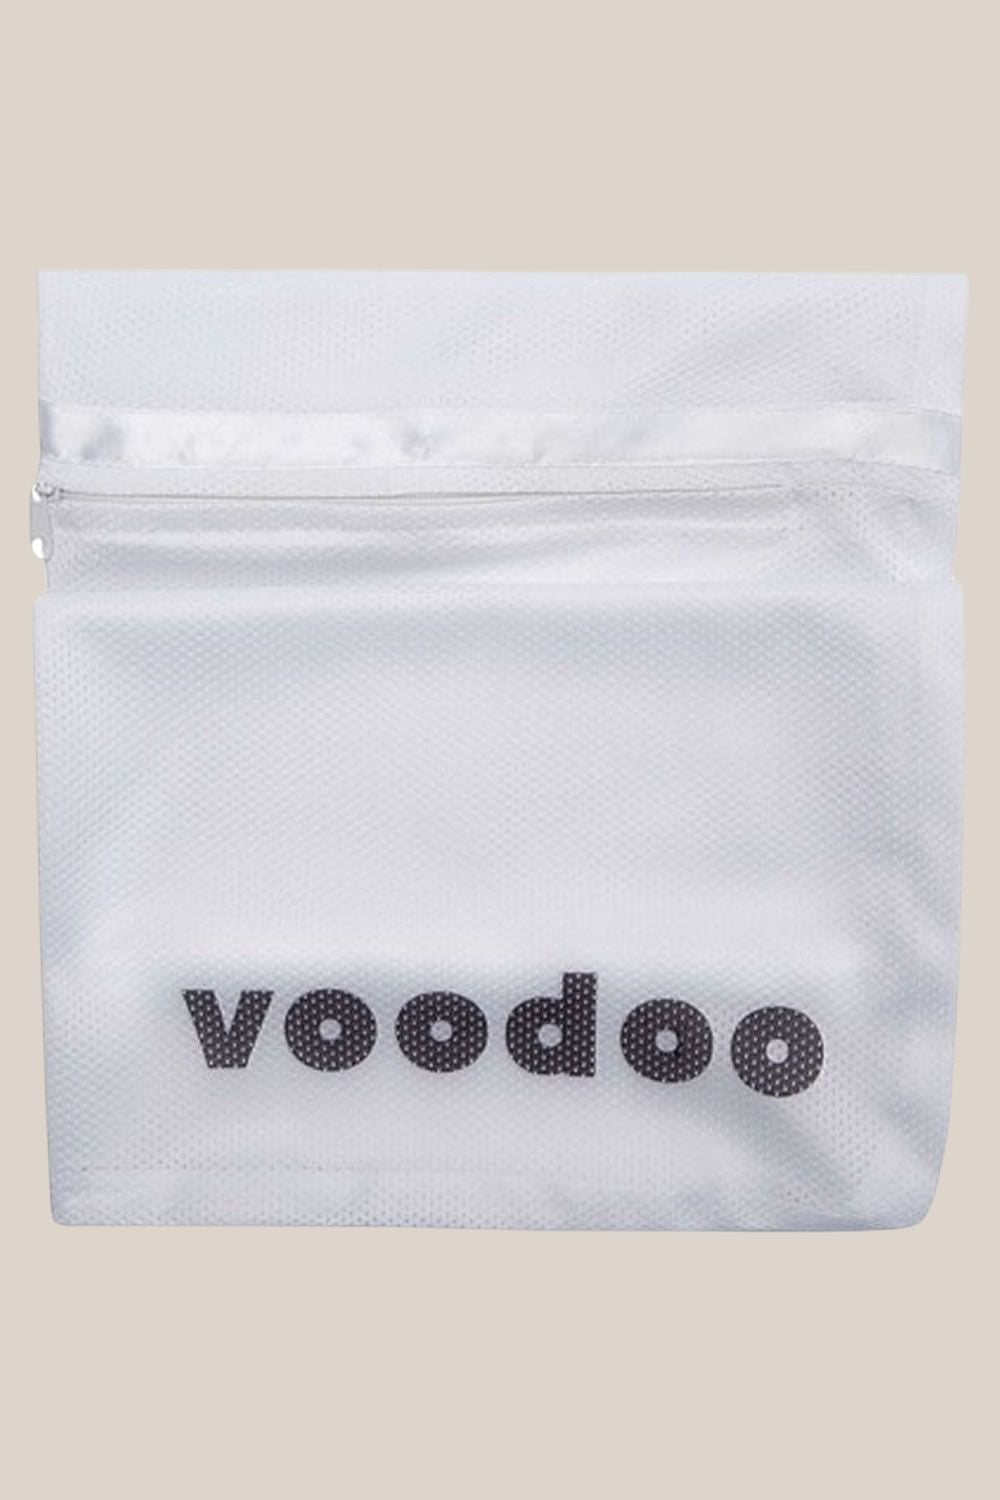 Voodoo Wash Bag